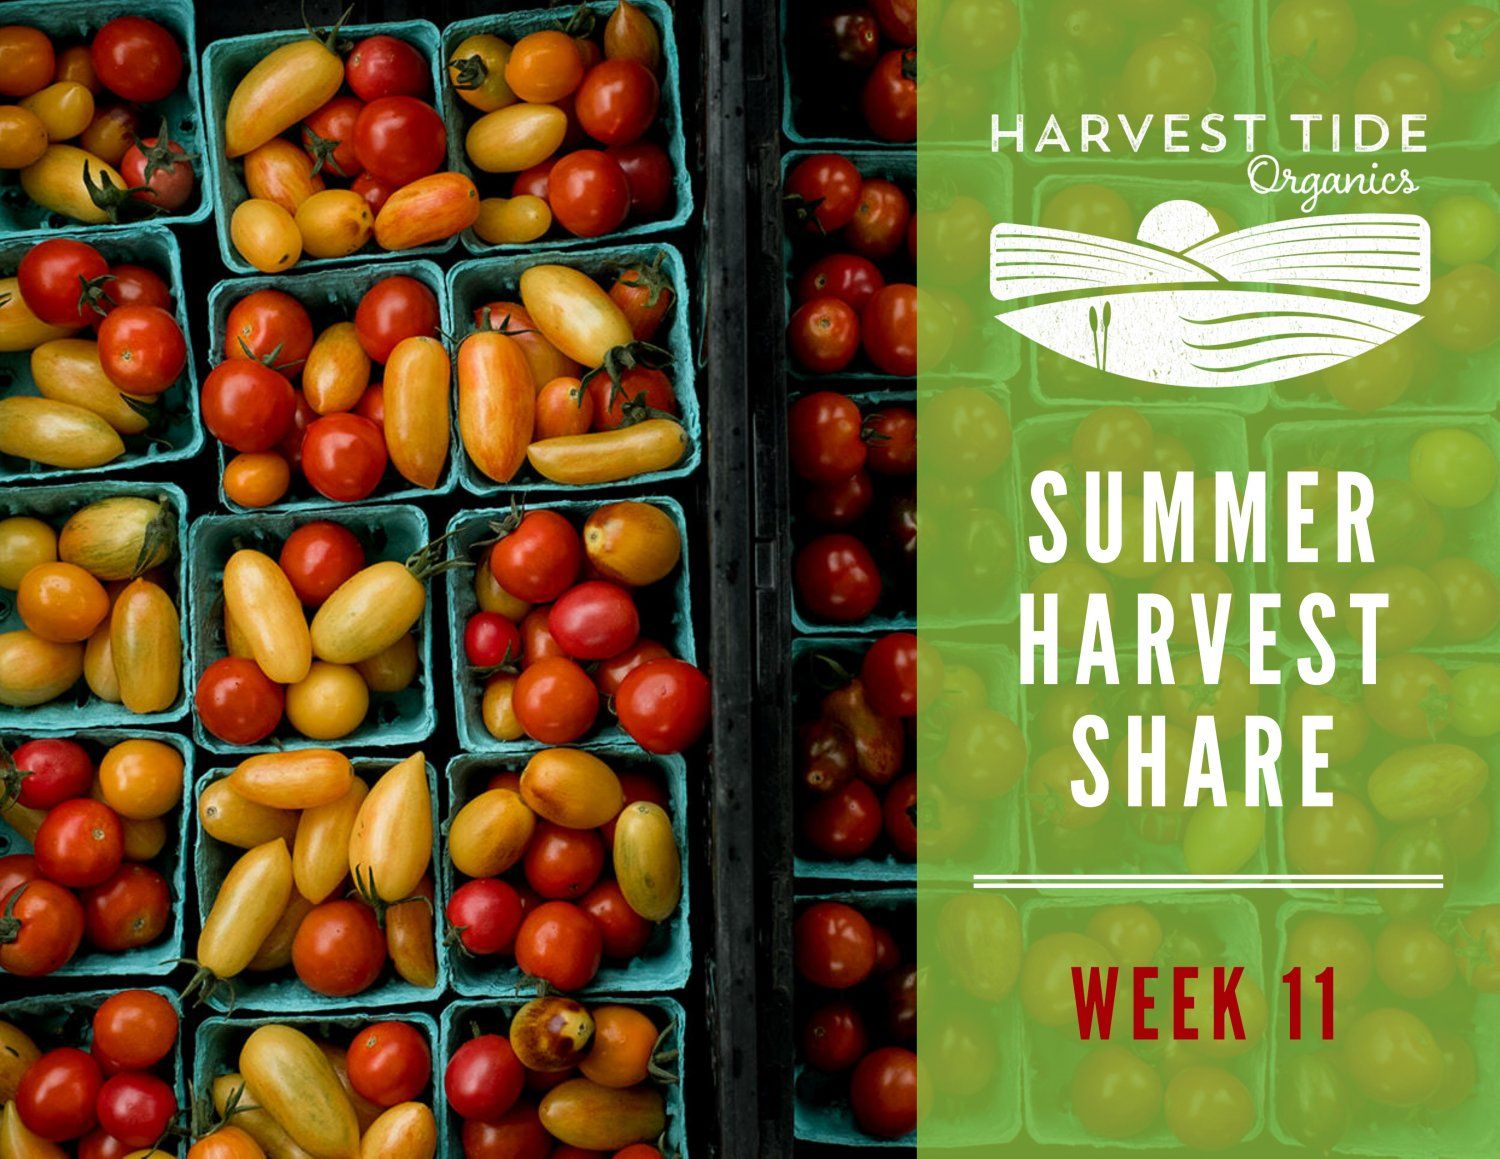 Previous Happening: Week 11 - Summer Harvest Share